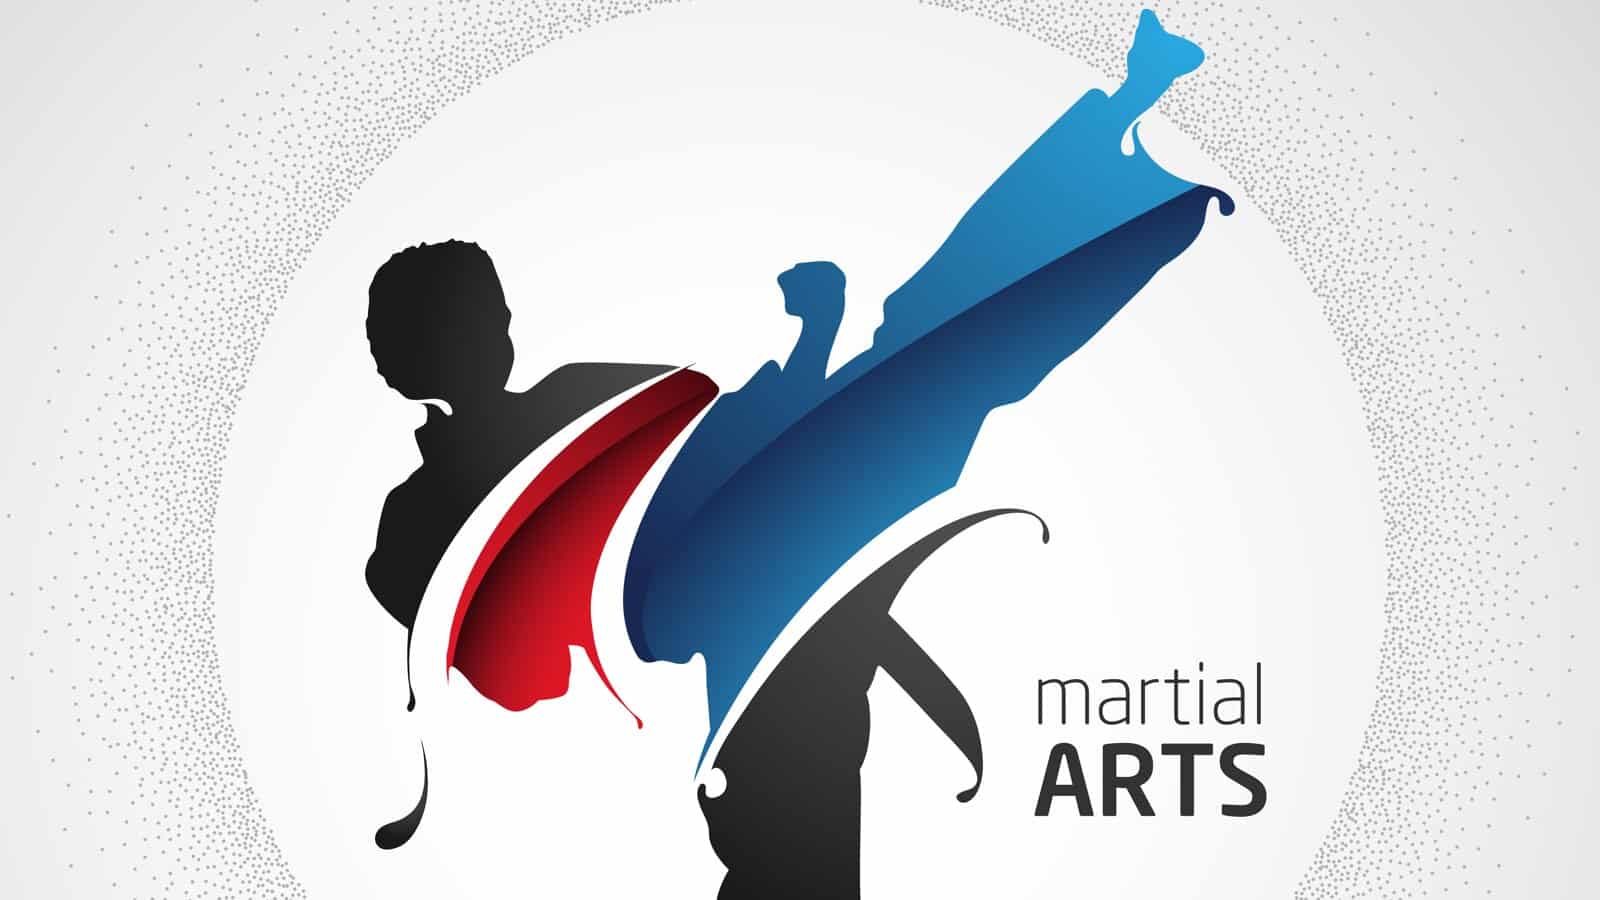 Martial arts kicking logo